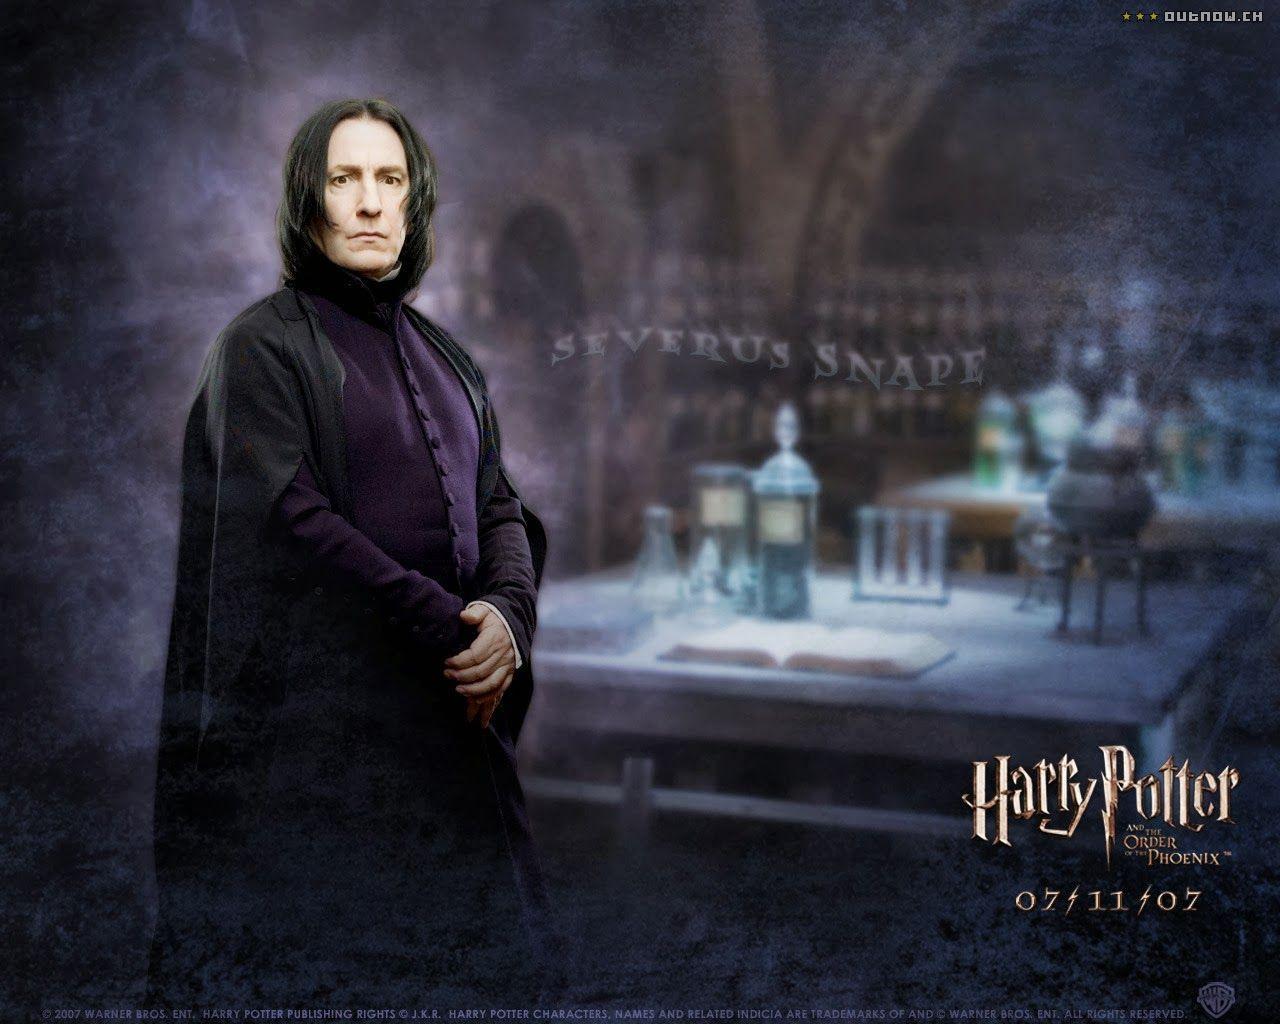 Free Desktop Wallpaper: Severus Snape Wallpaper